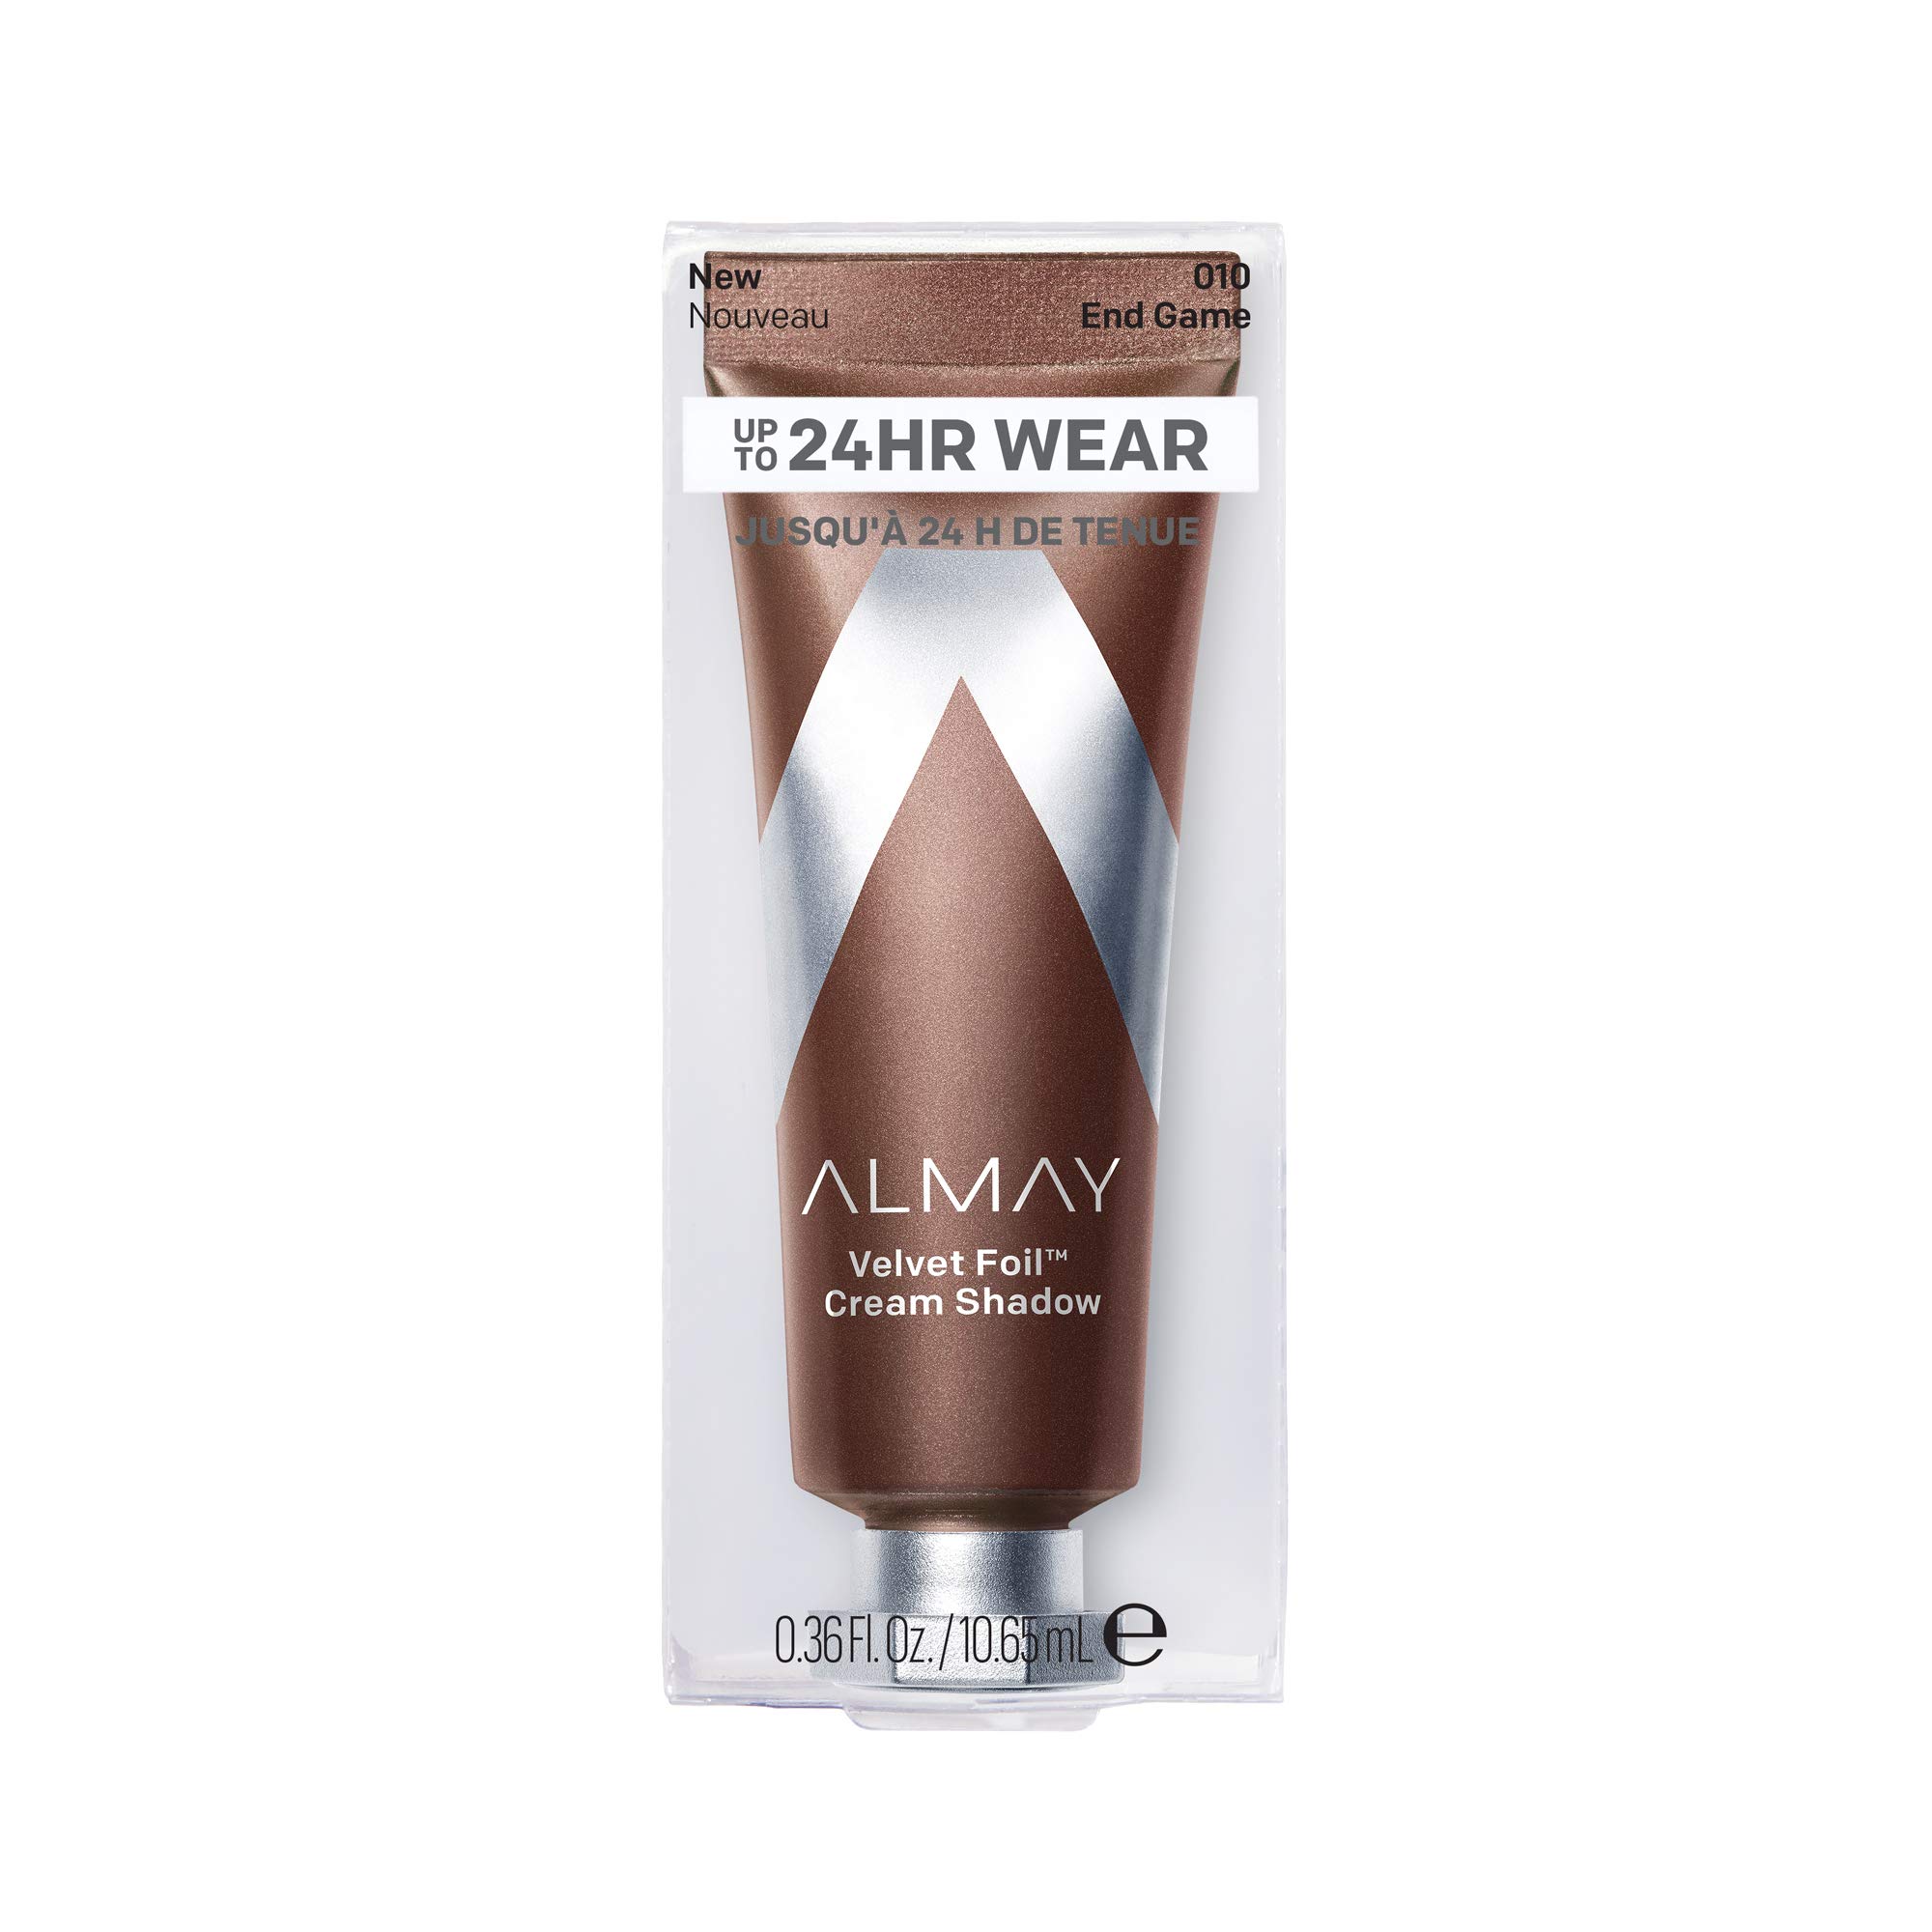 Almay Velvet Foil Cream Shadow, End Game, 0.36 fl. oz., metallic eyeshadow